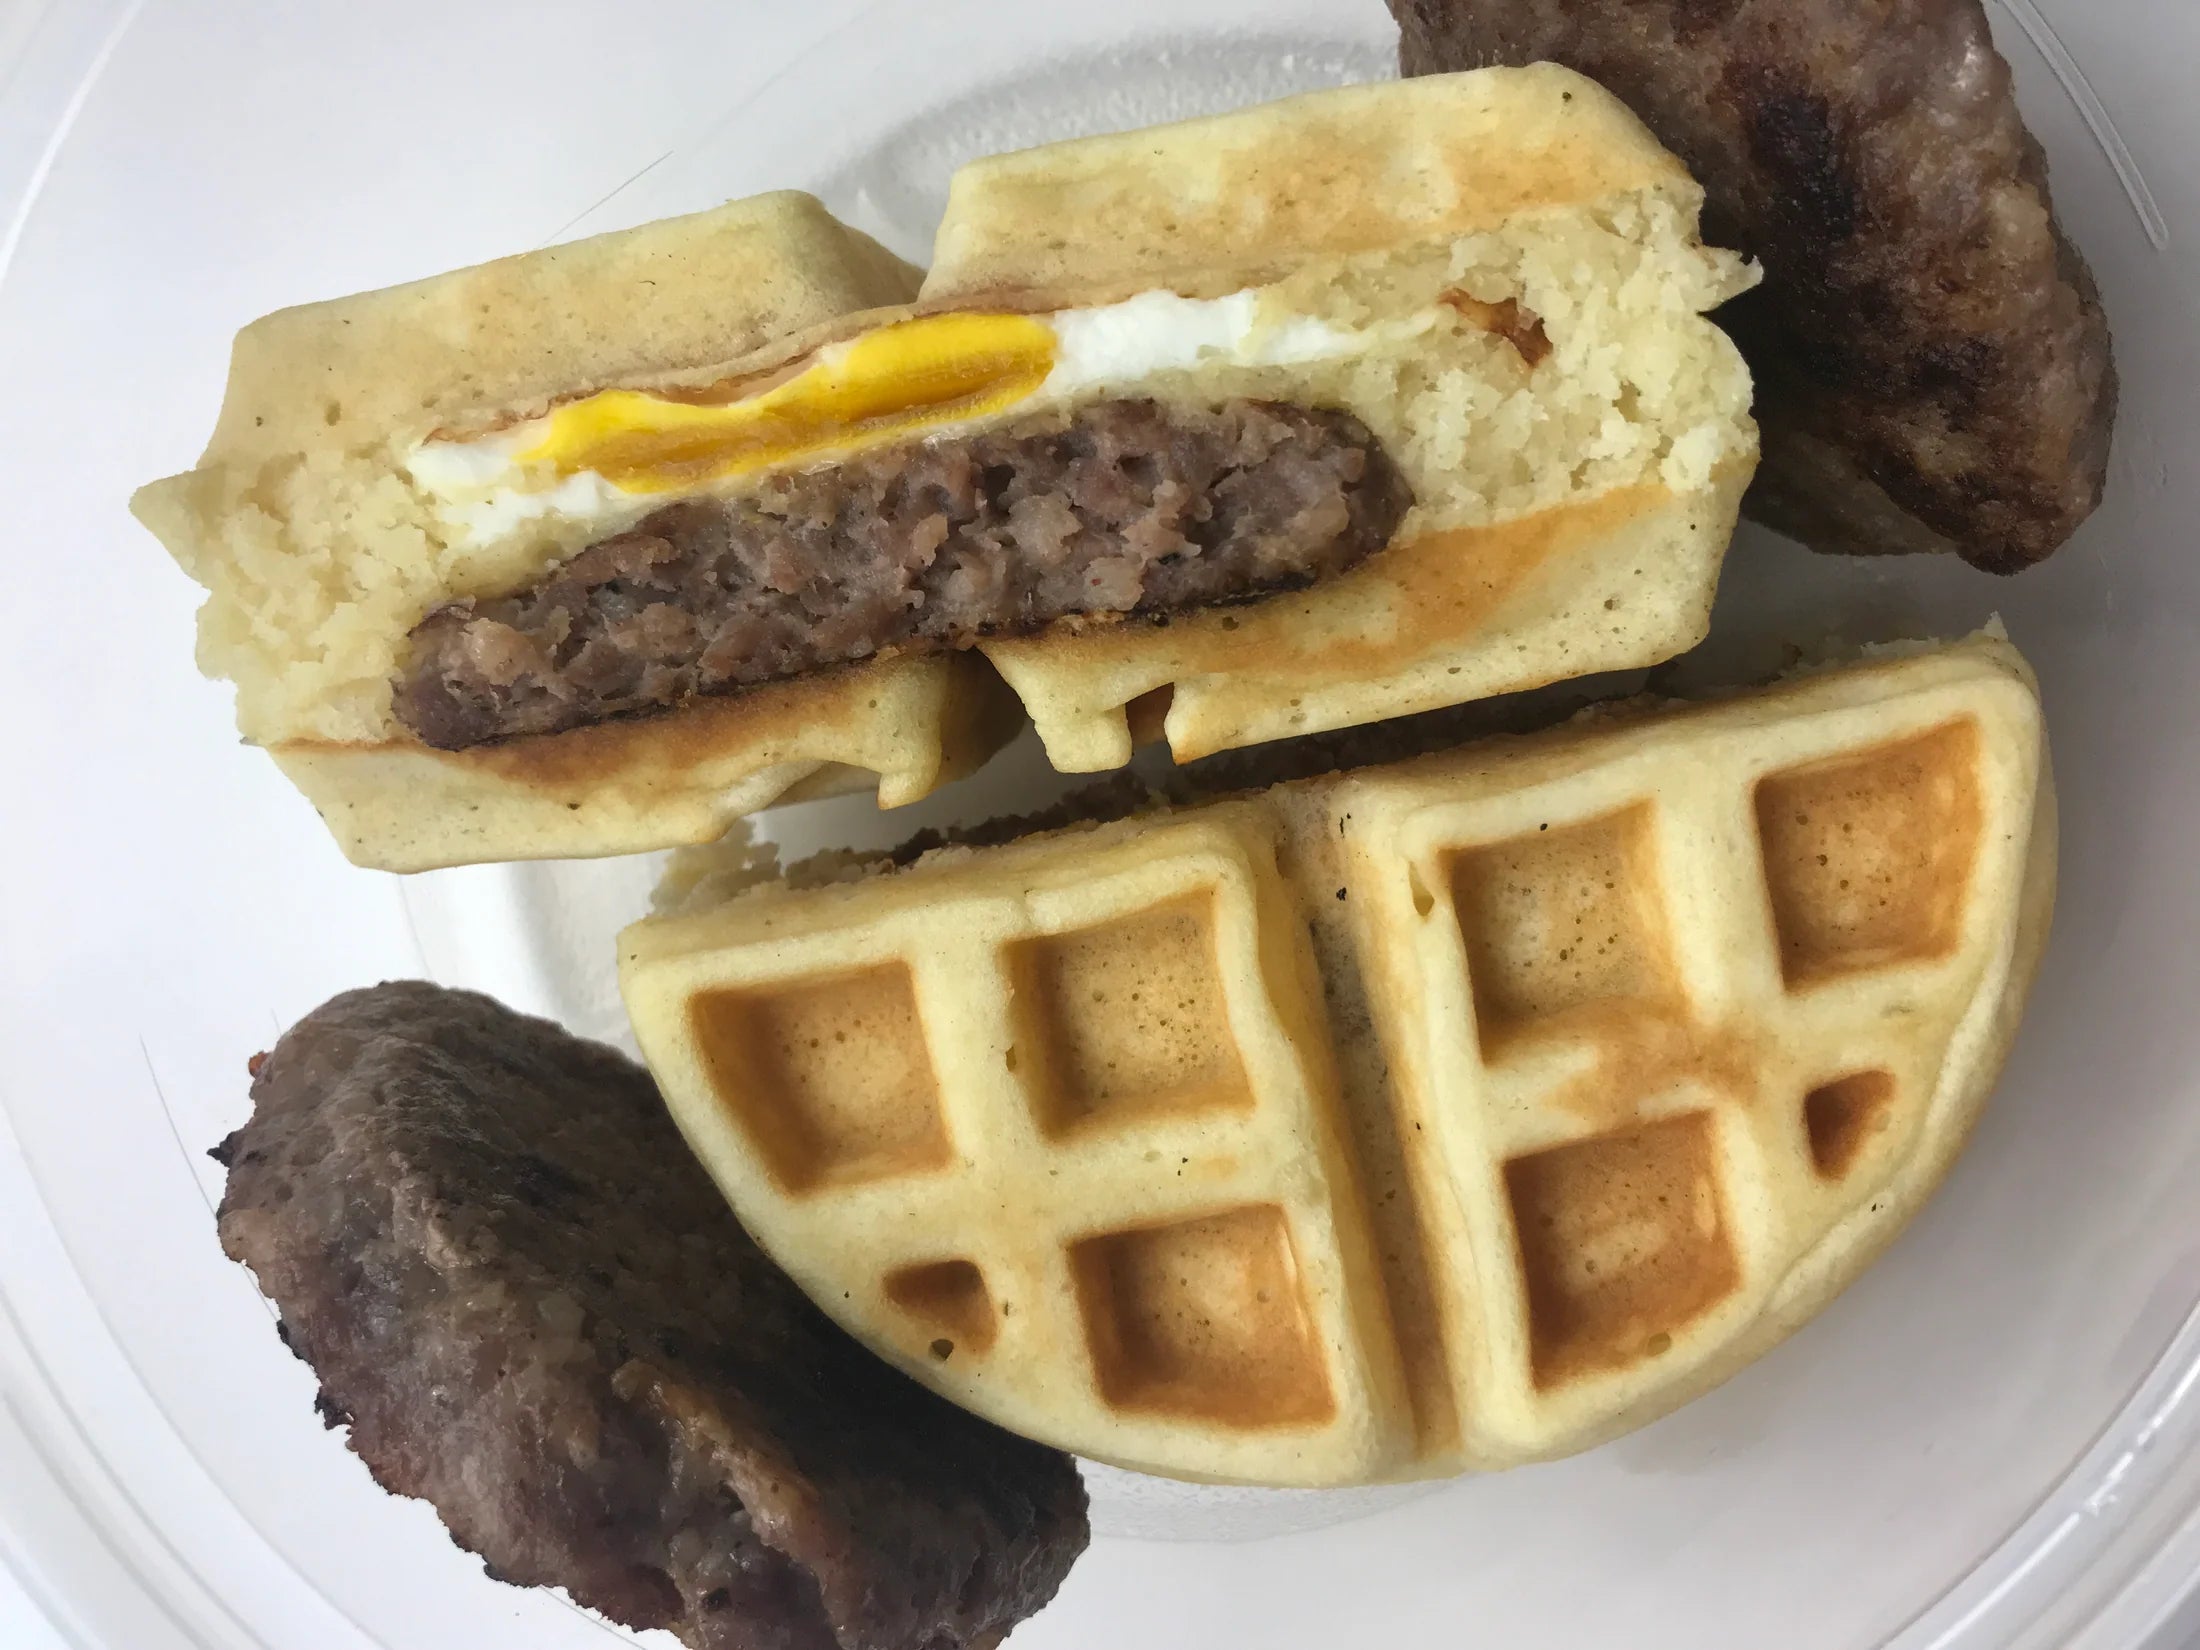 Deal Or Dud: Wonderffle Stuffed Waffle Maker